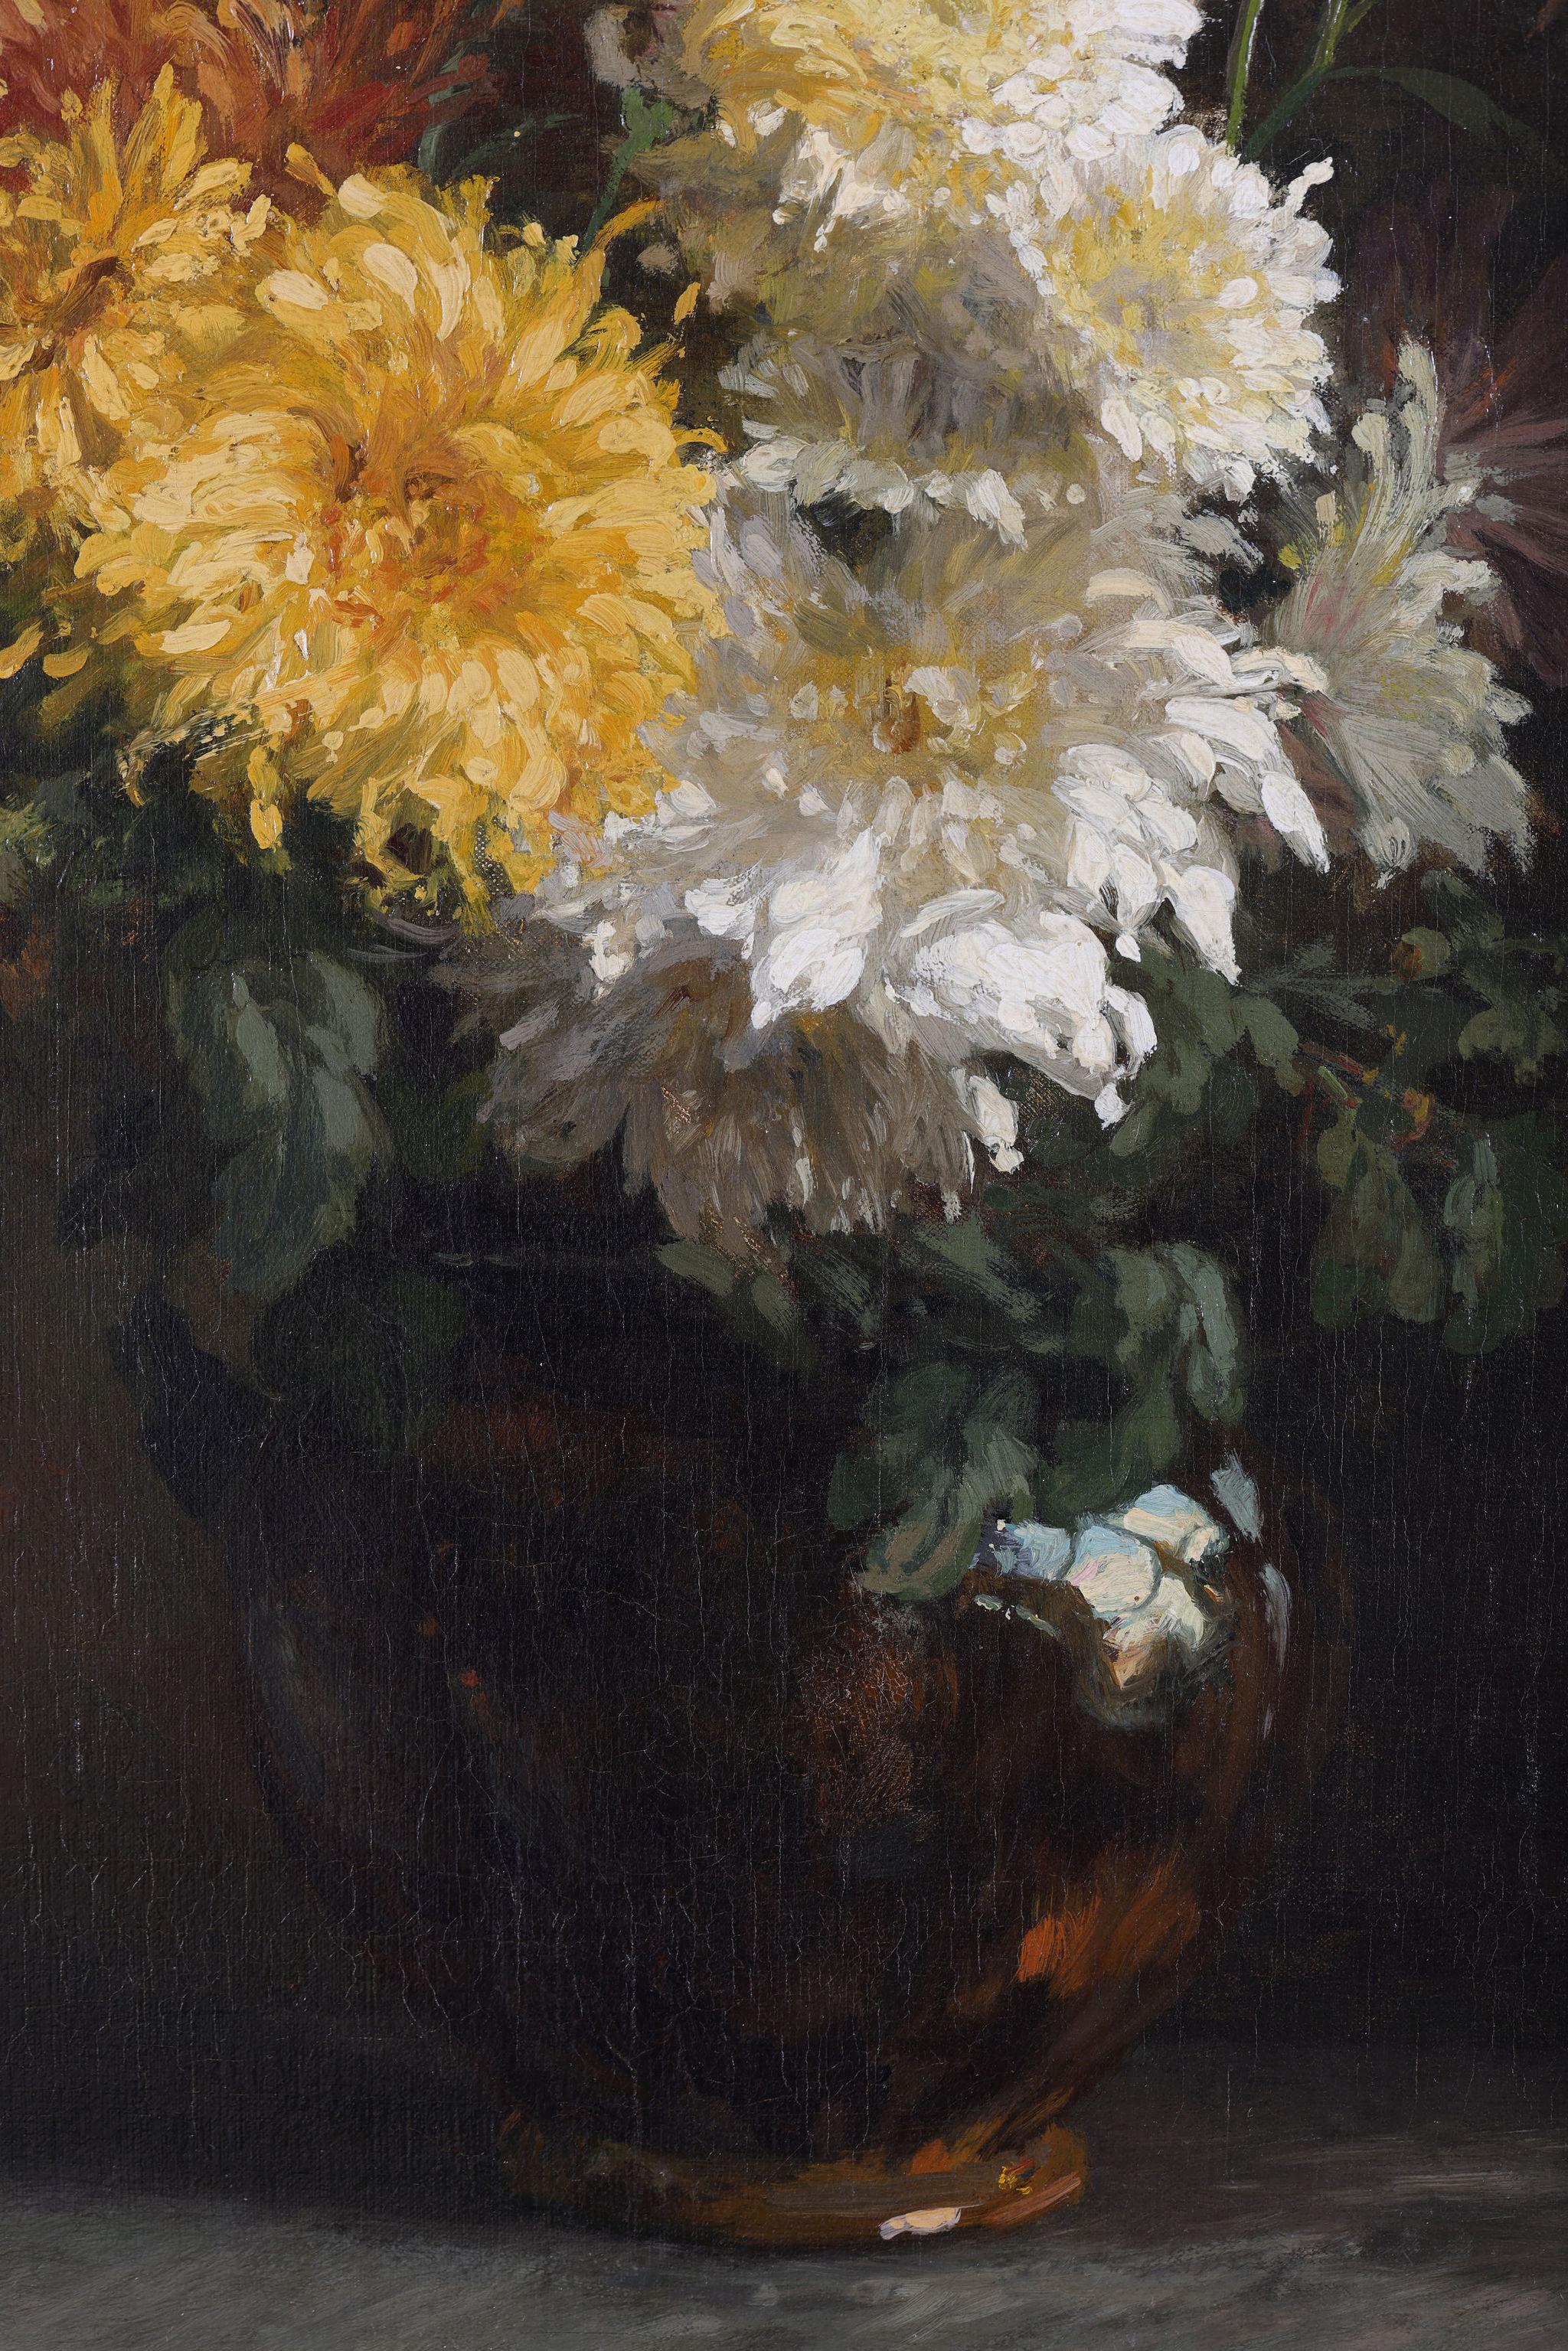 A Still Life of Chrysanthemums - Black Still-Life Painting by Gerardine Van De Sande Bakhuyzen